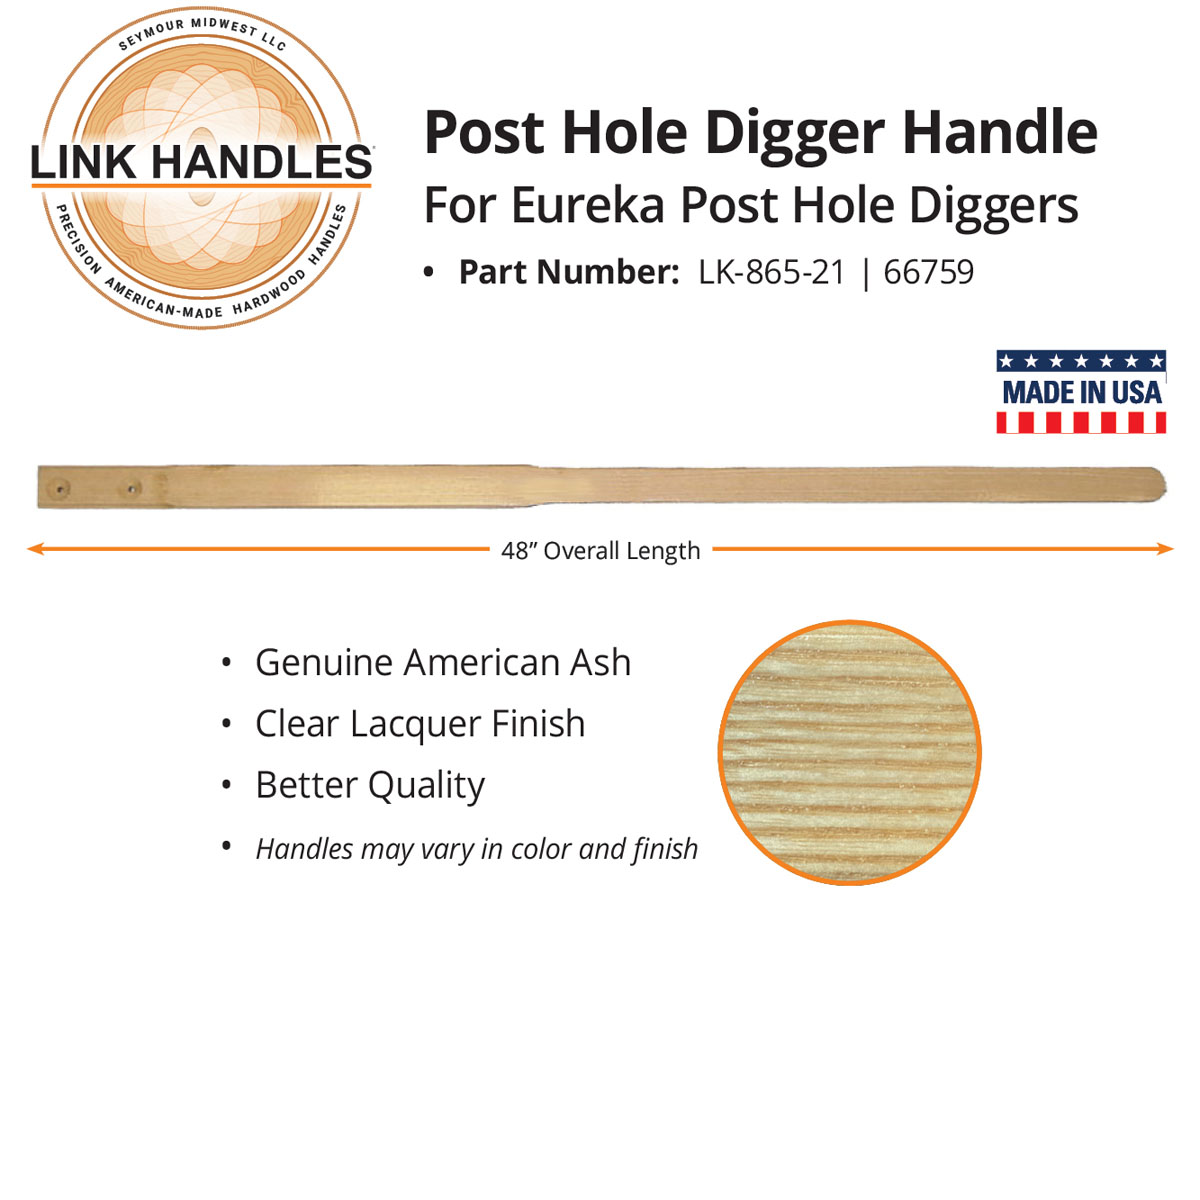 Posthole Diggers 48" Handle for Eureka posthole diggers